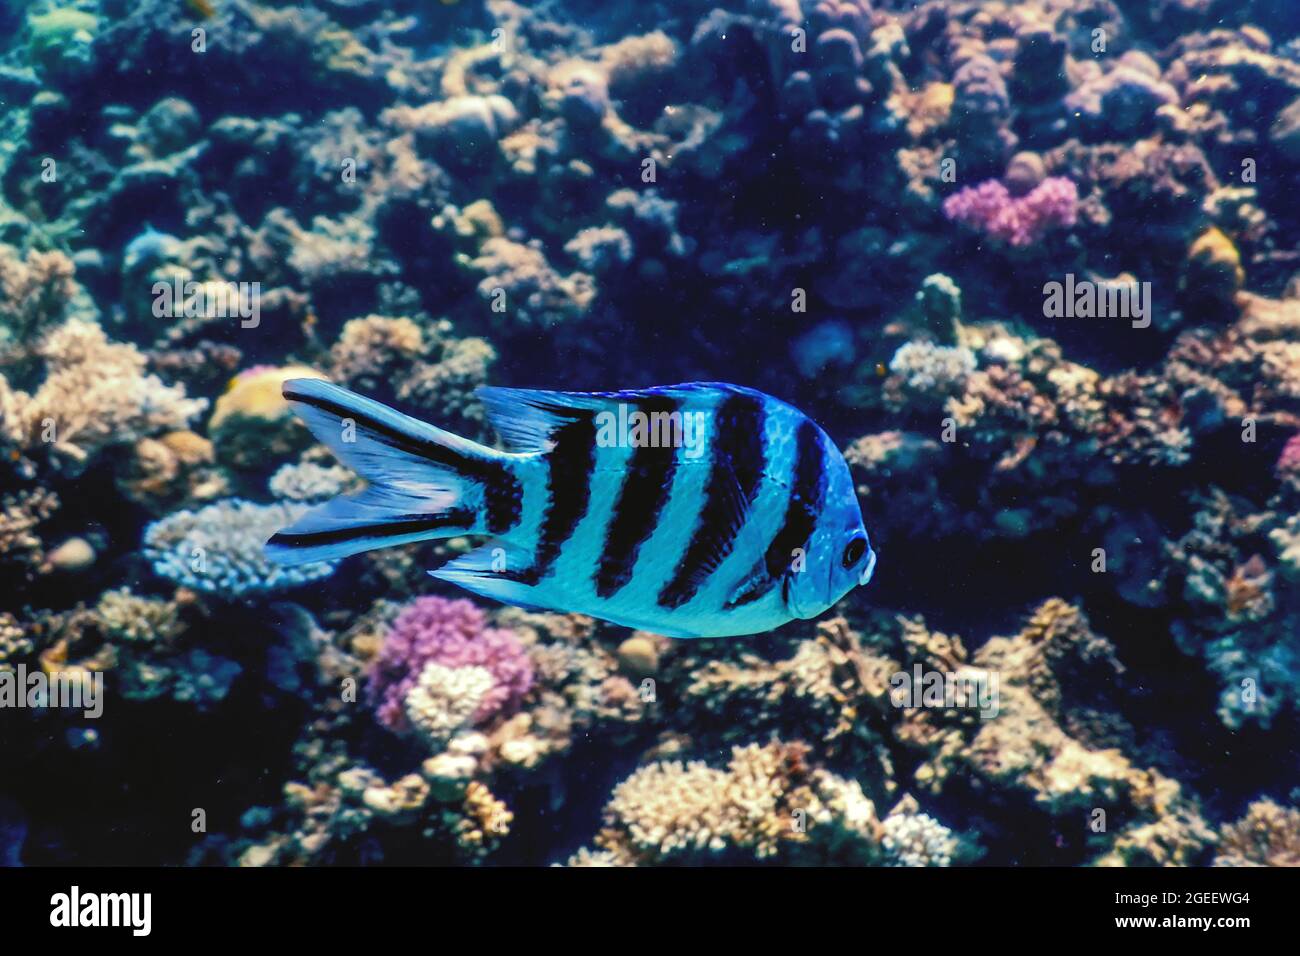 Scissortail pesce sergente (Abudefduf sexfasciatus) rigettò damselfish sott'acqua, acque tropicali, vita marina Foto Stock